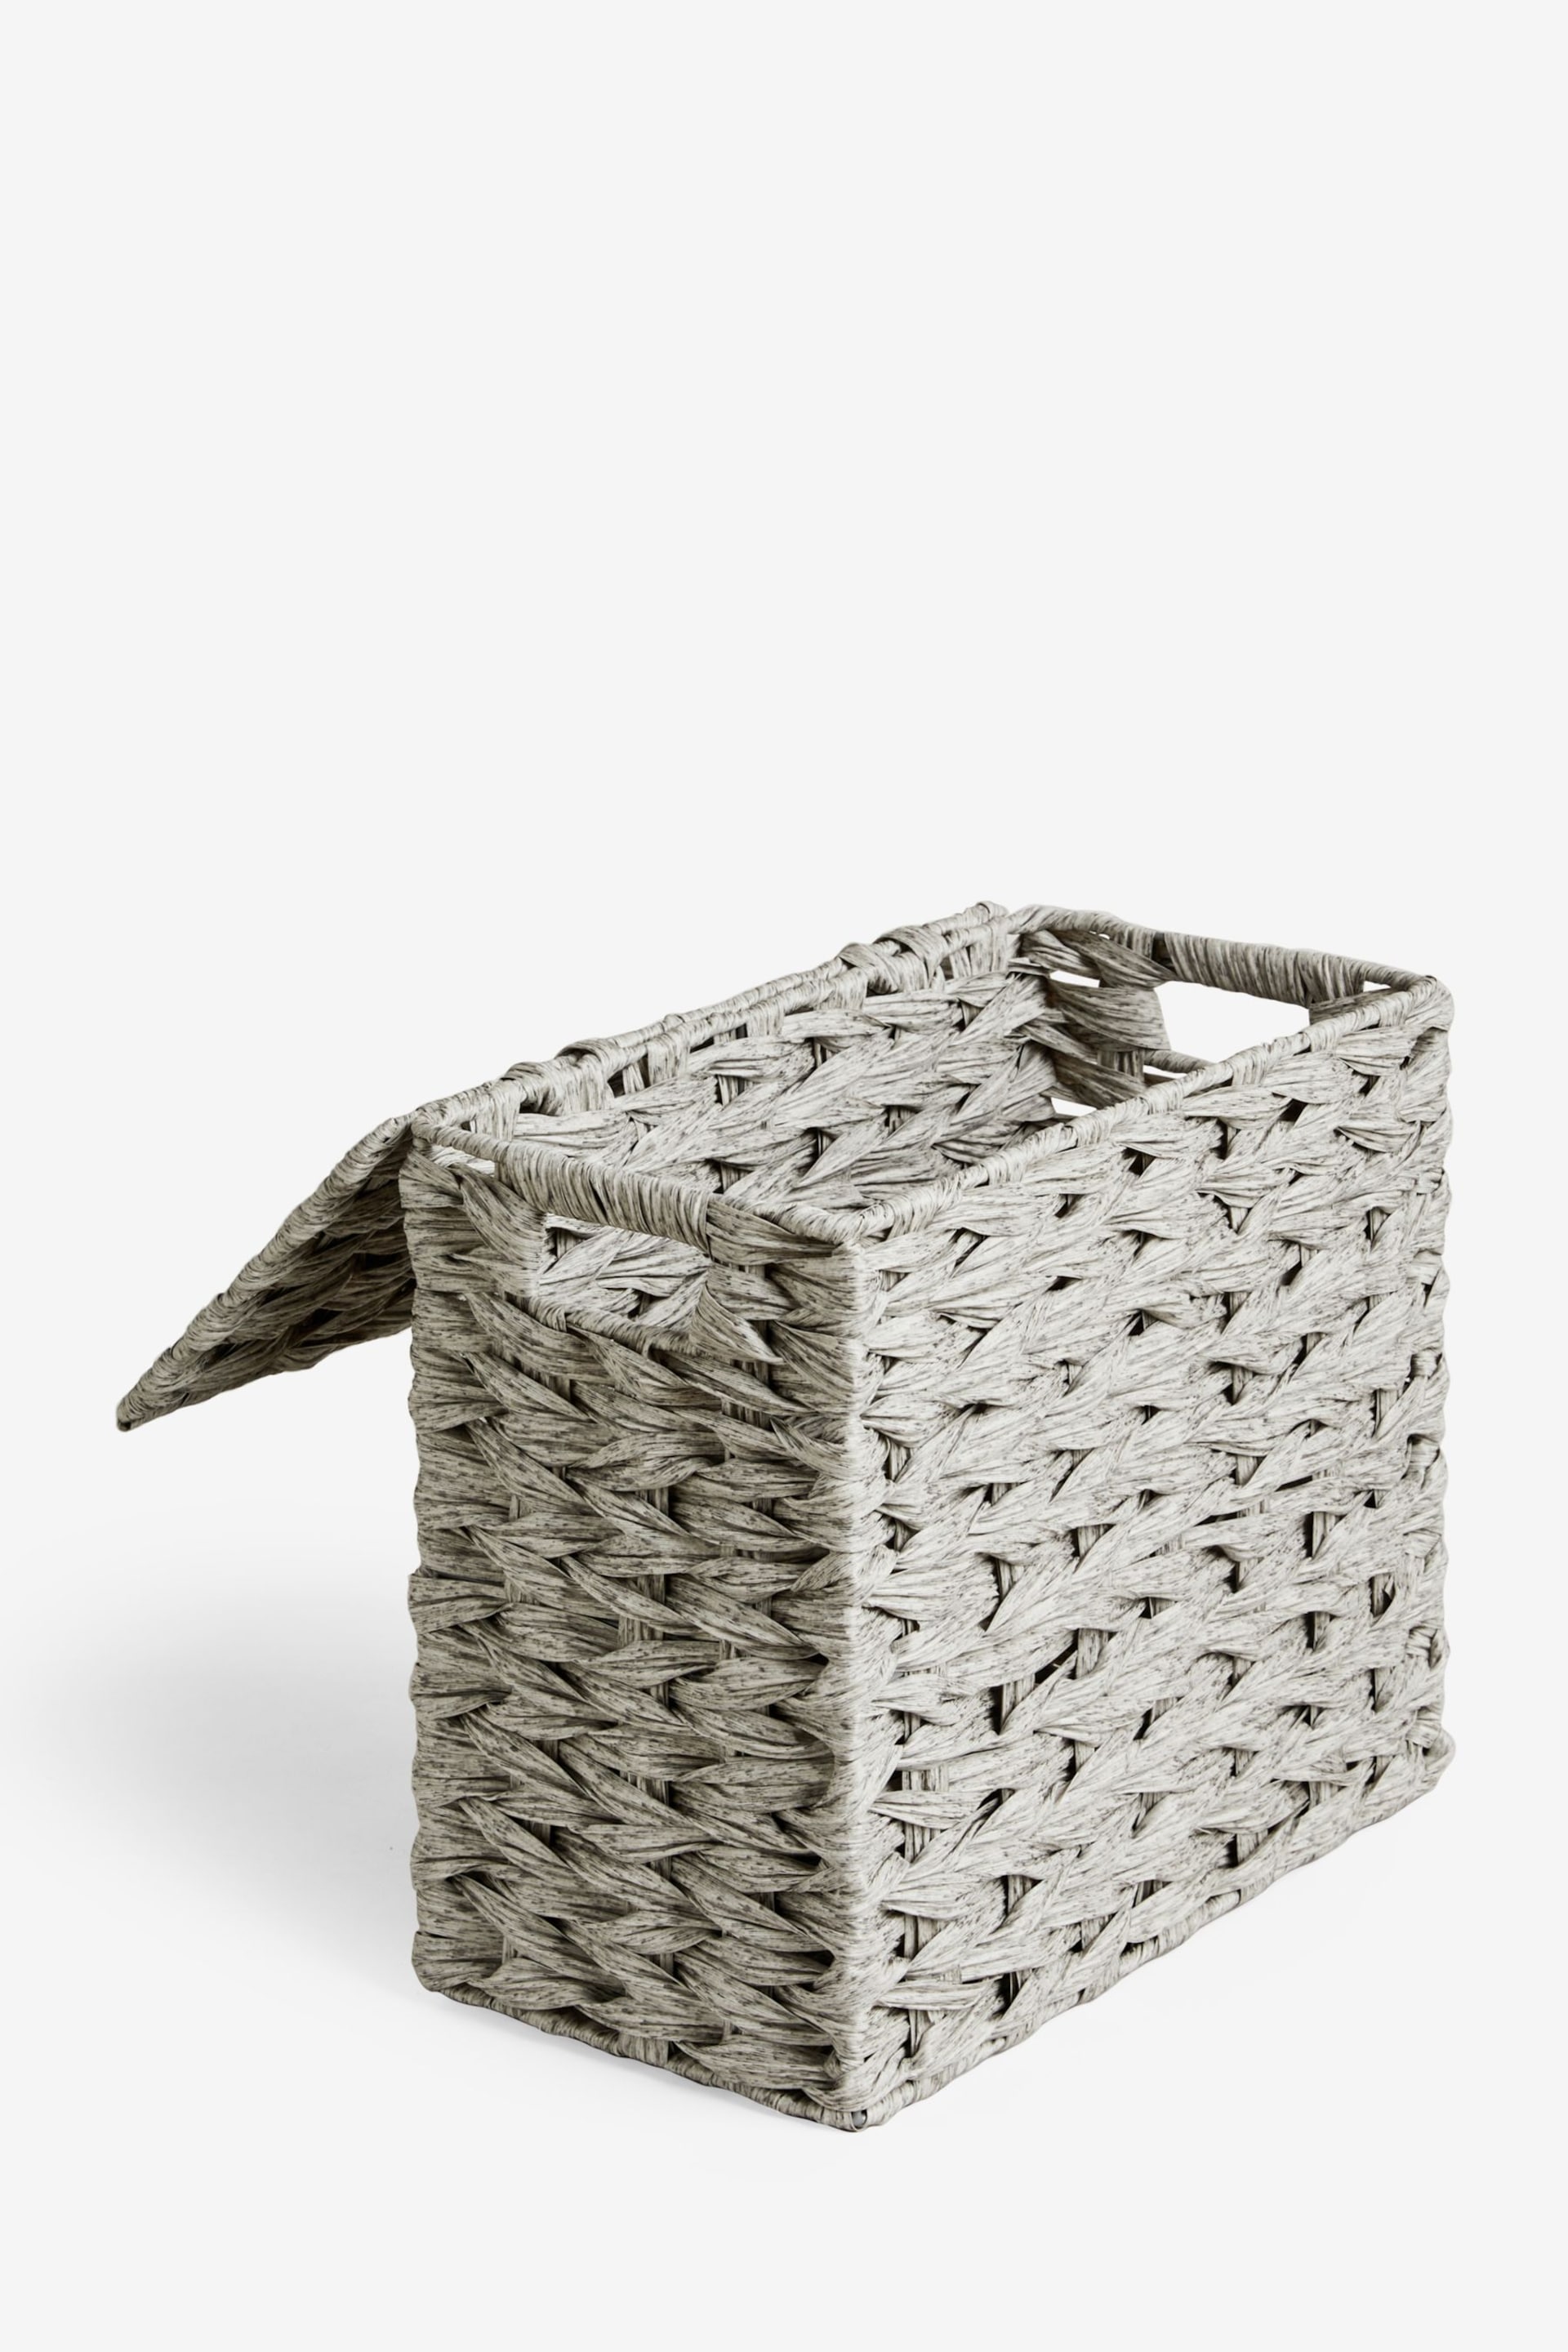 Grey Plastic Wicker Storage Basket - Image 10 of 10